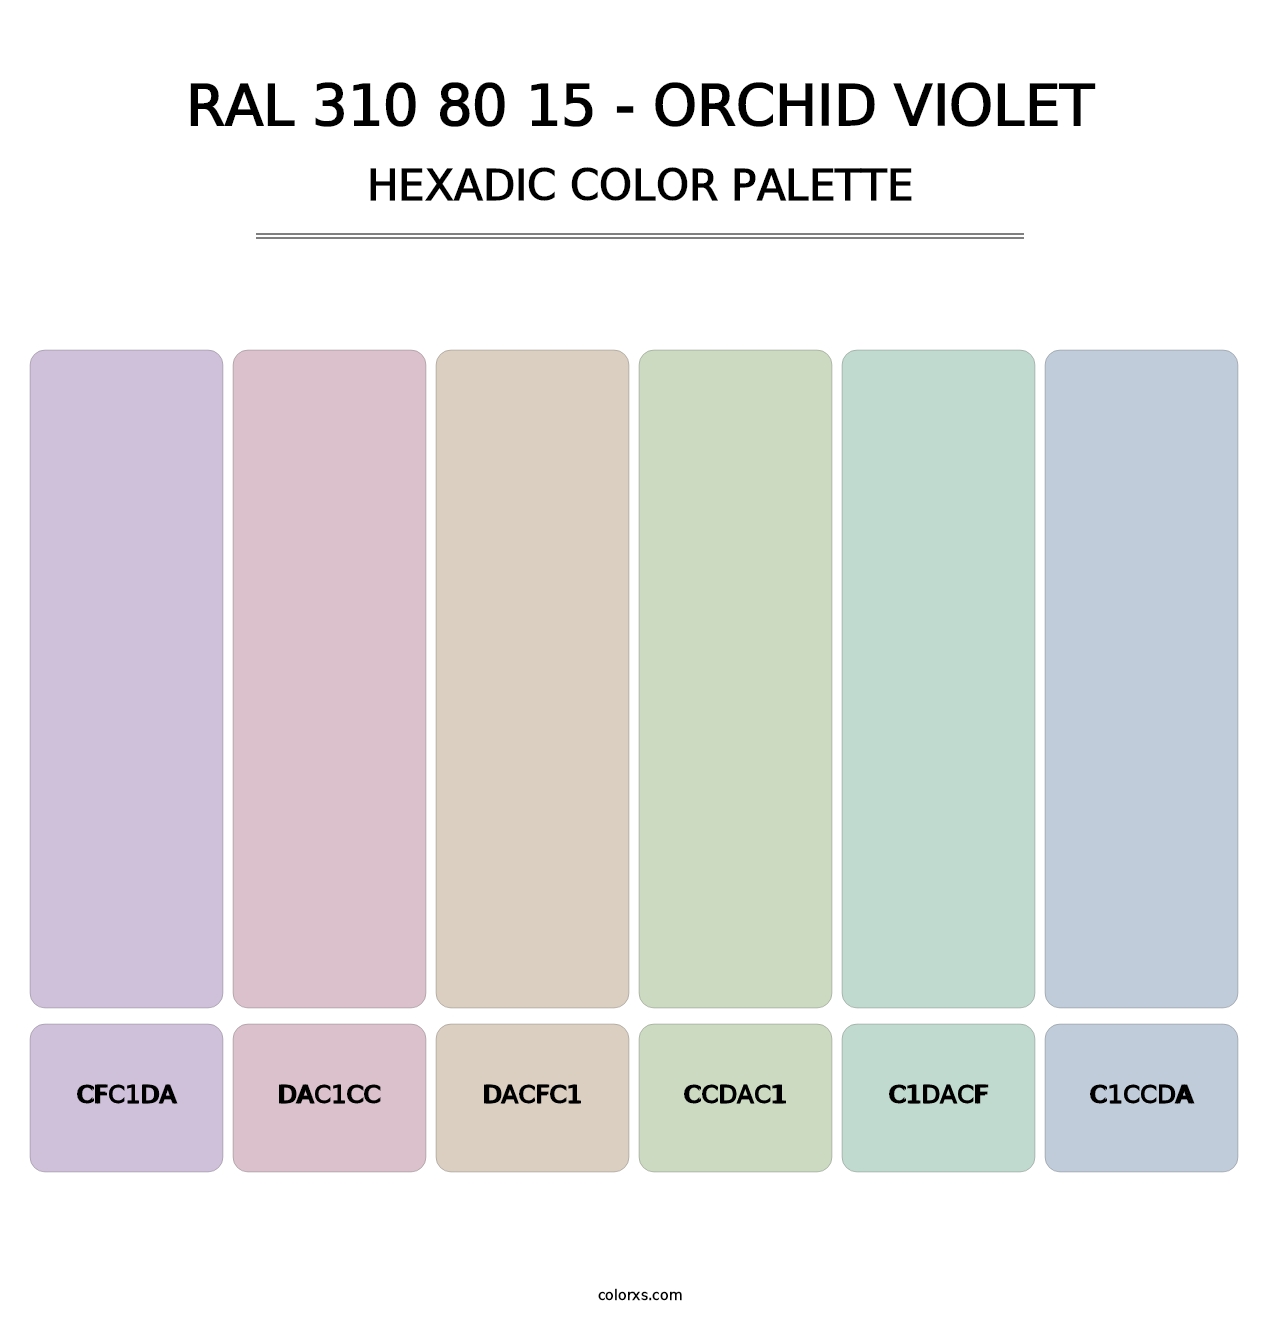 RAL 310 80 15 - Orchid Violet - Hexadic Color Palette